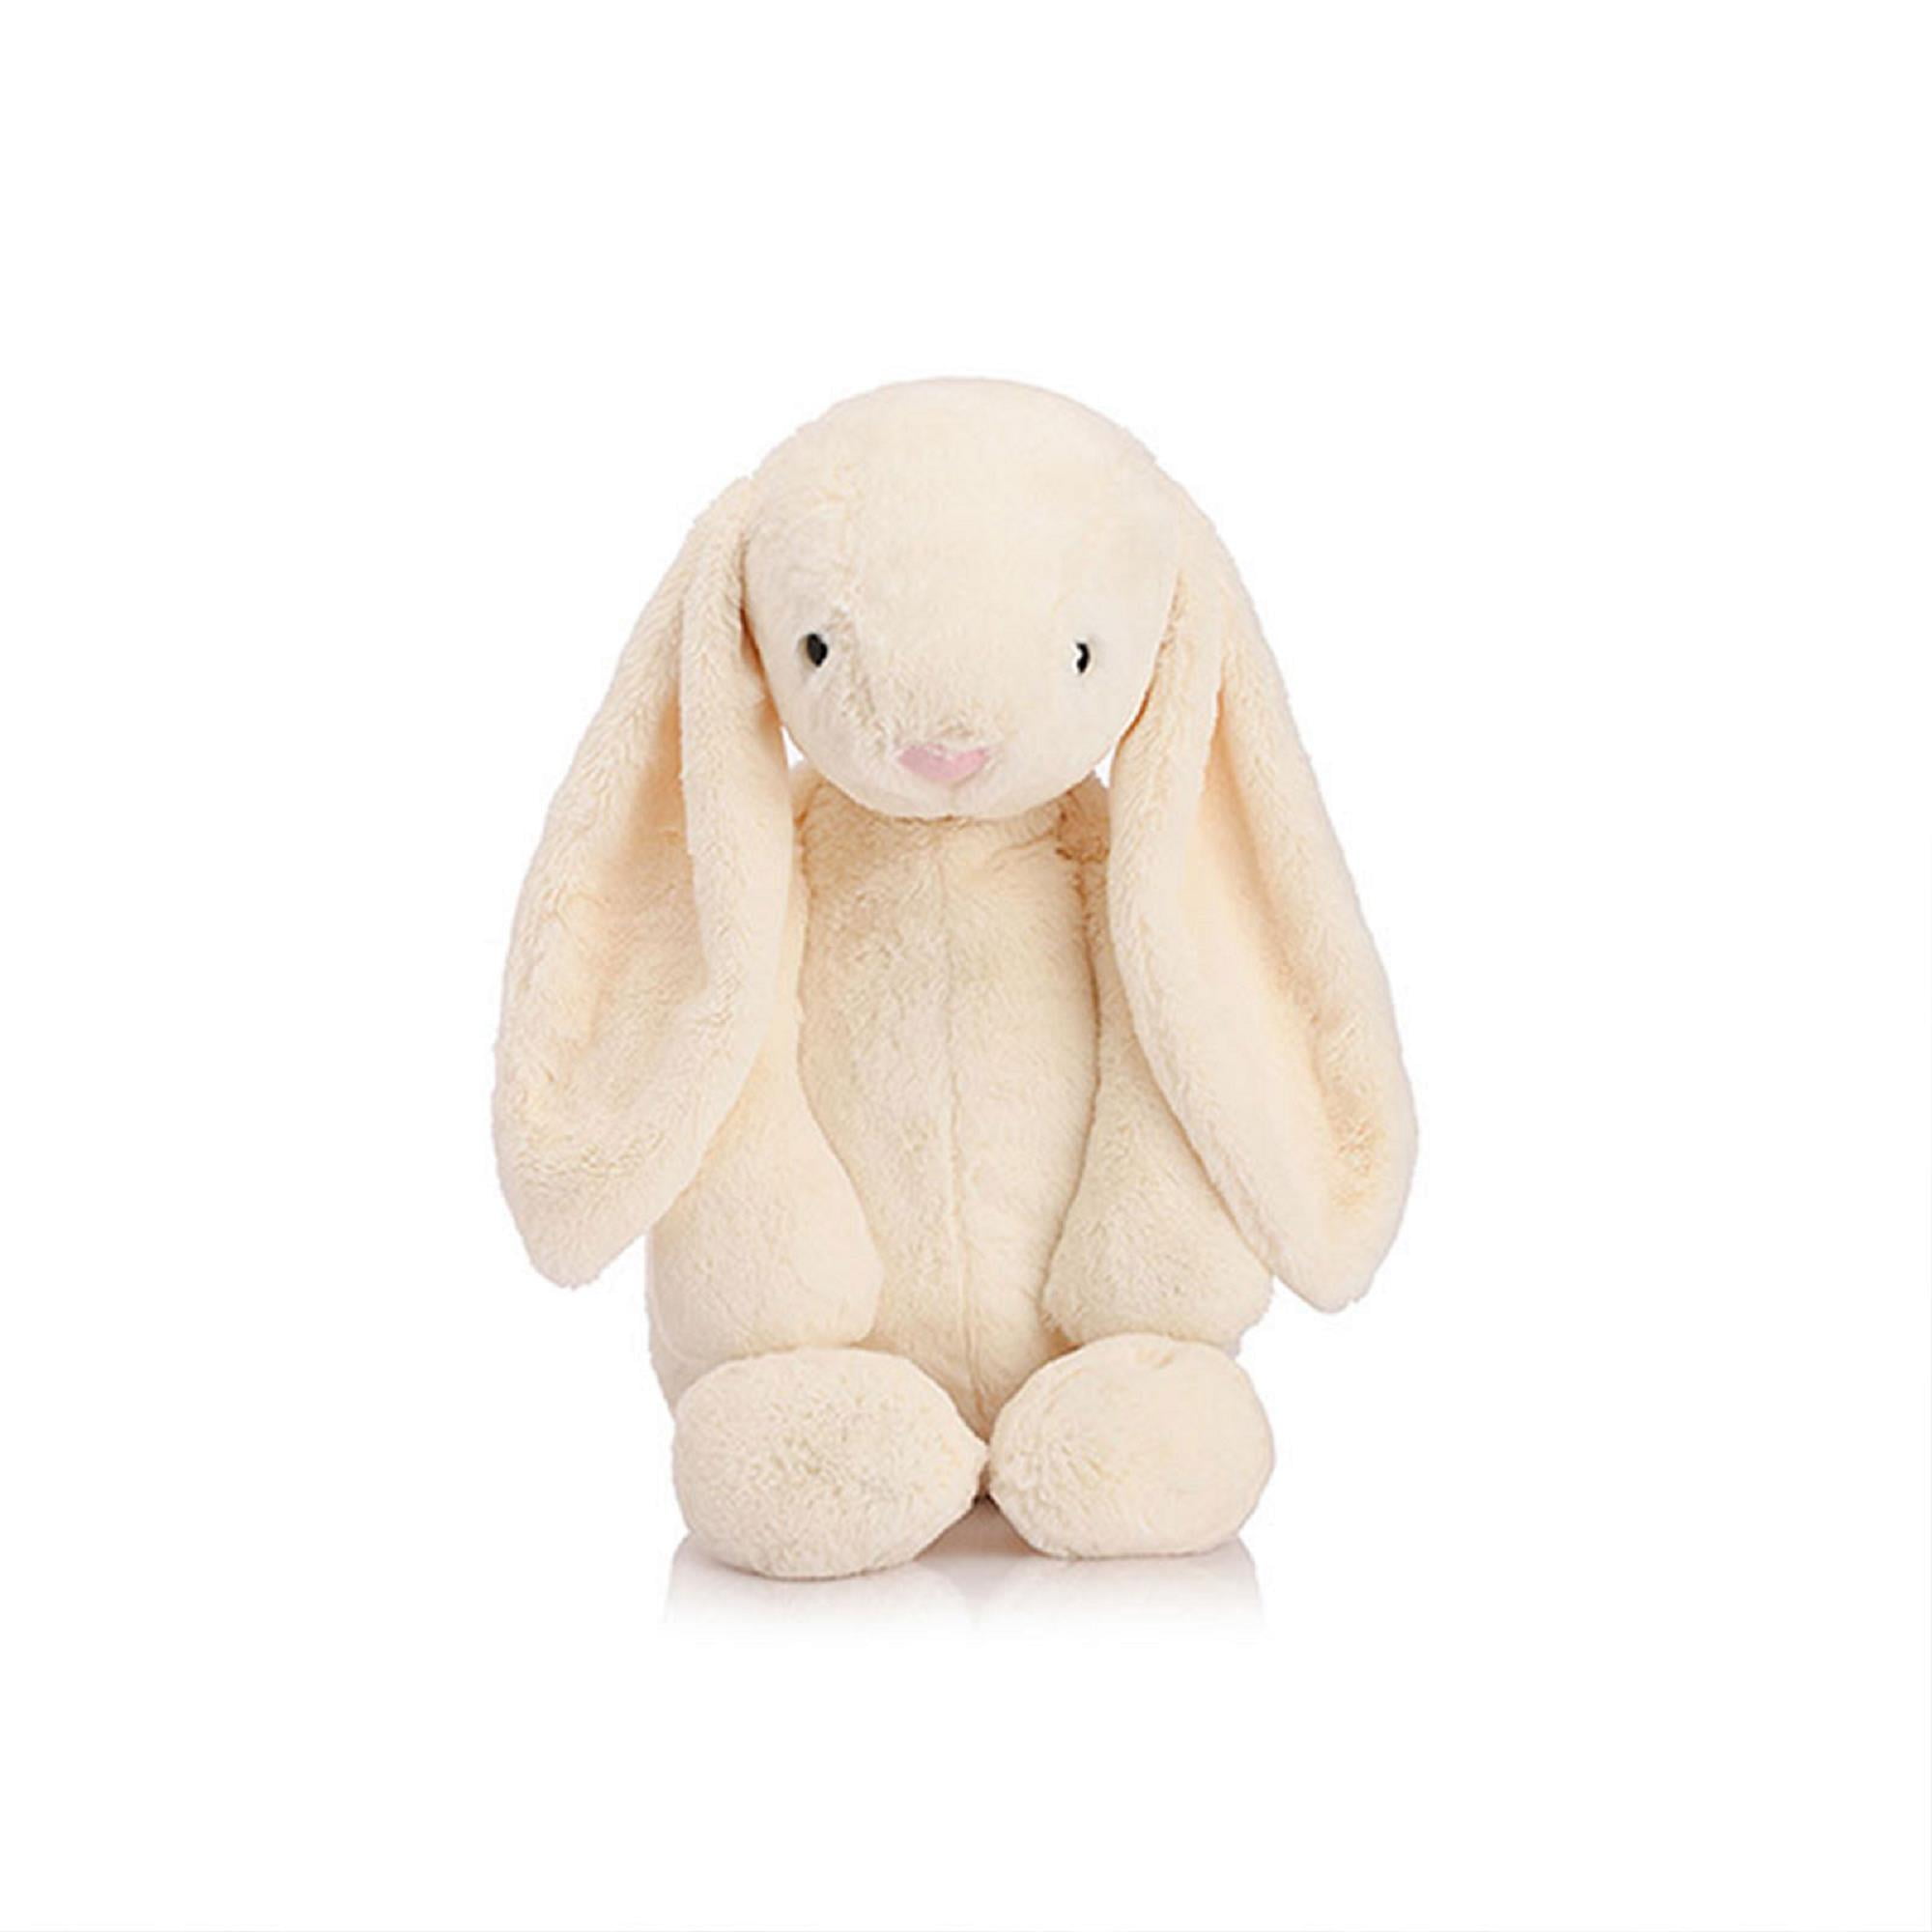 Animal Adventures Briwn & White Long Ear Bunny Rabbit Plush Stuffed Animal NWT